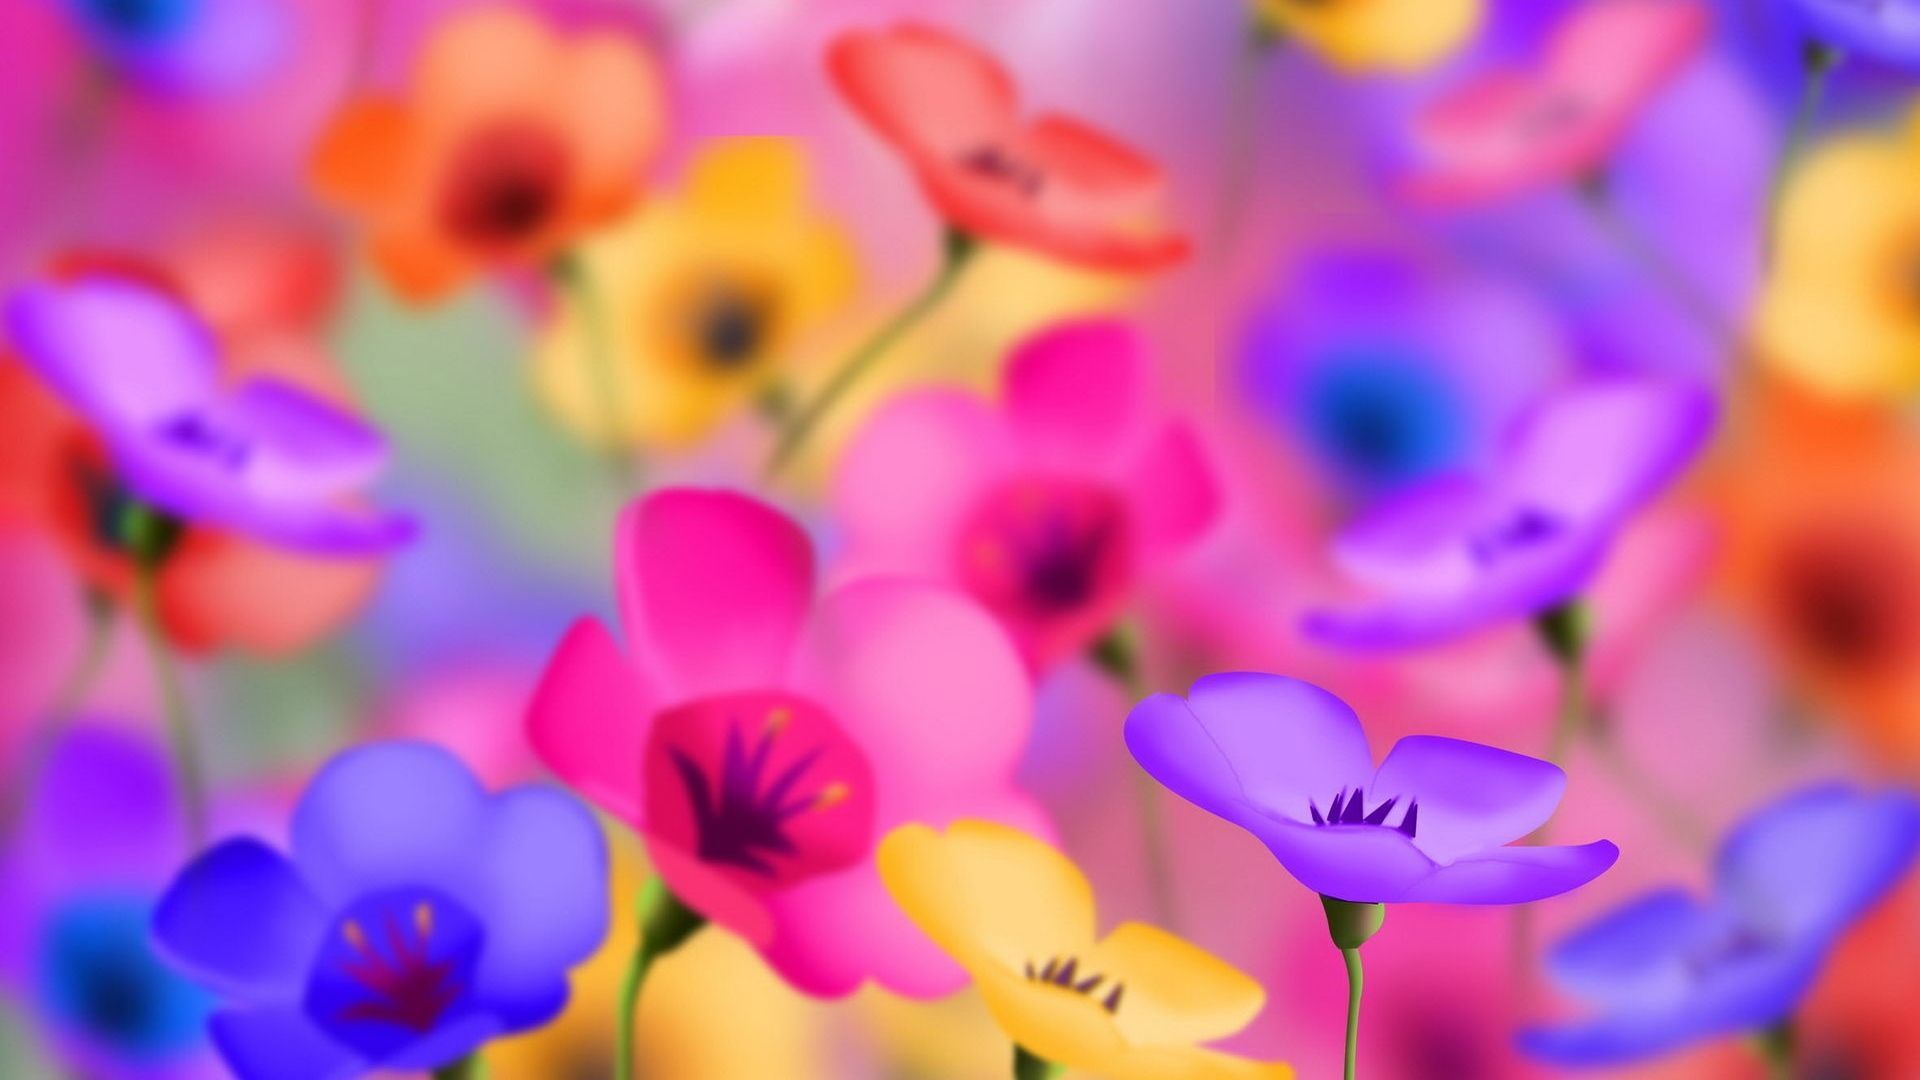 1080p Flower Background Hd - 1920x1080 Wallpaper 